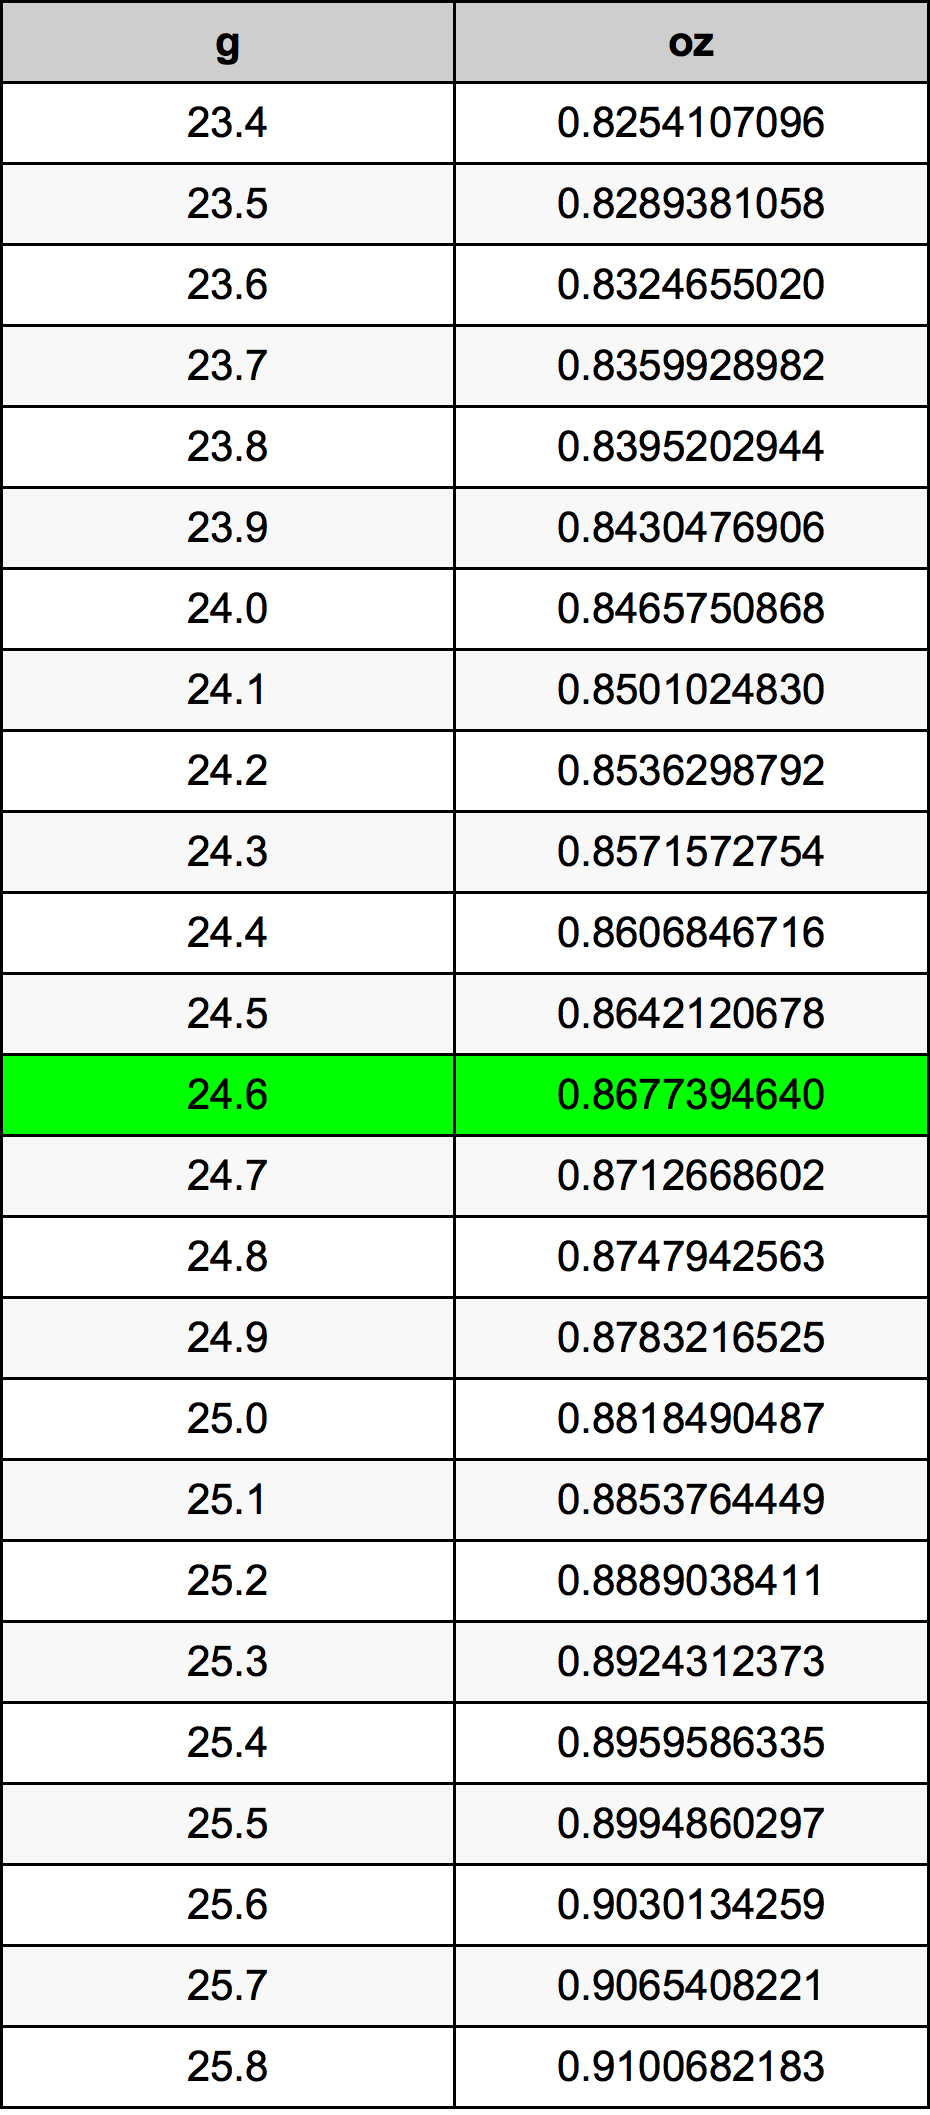 24.6 غرام جدول تحويل